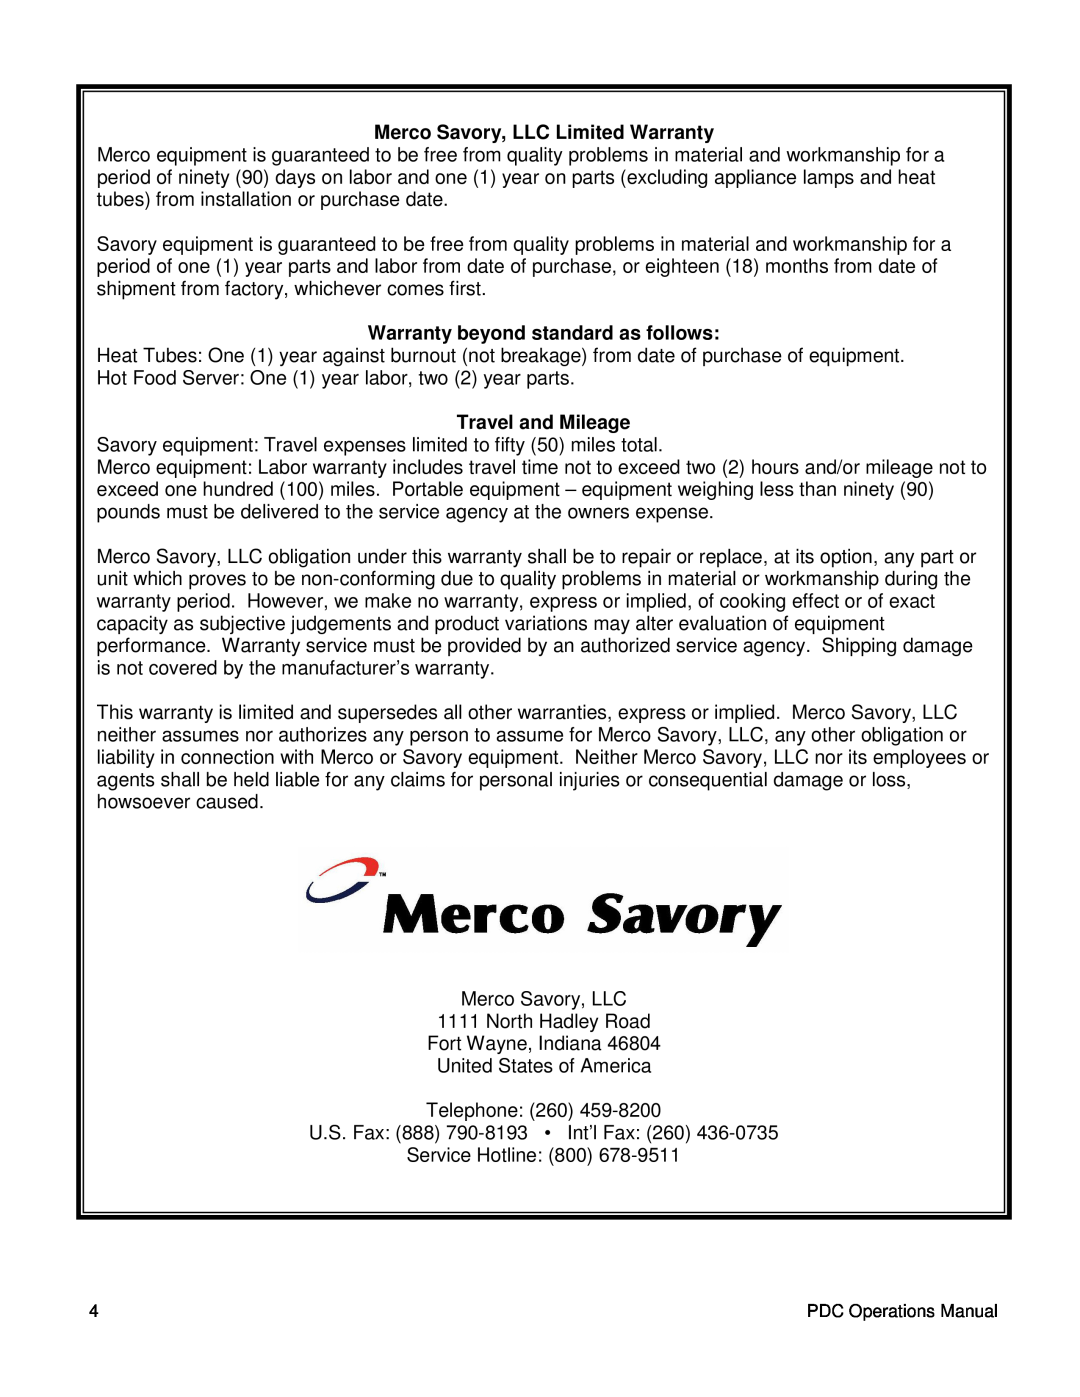 Merco Savory PDC-4818 Merco Savory, LLC Limited Warranty, Warranty beyond standard as follows, Travel and Mileage 